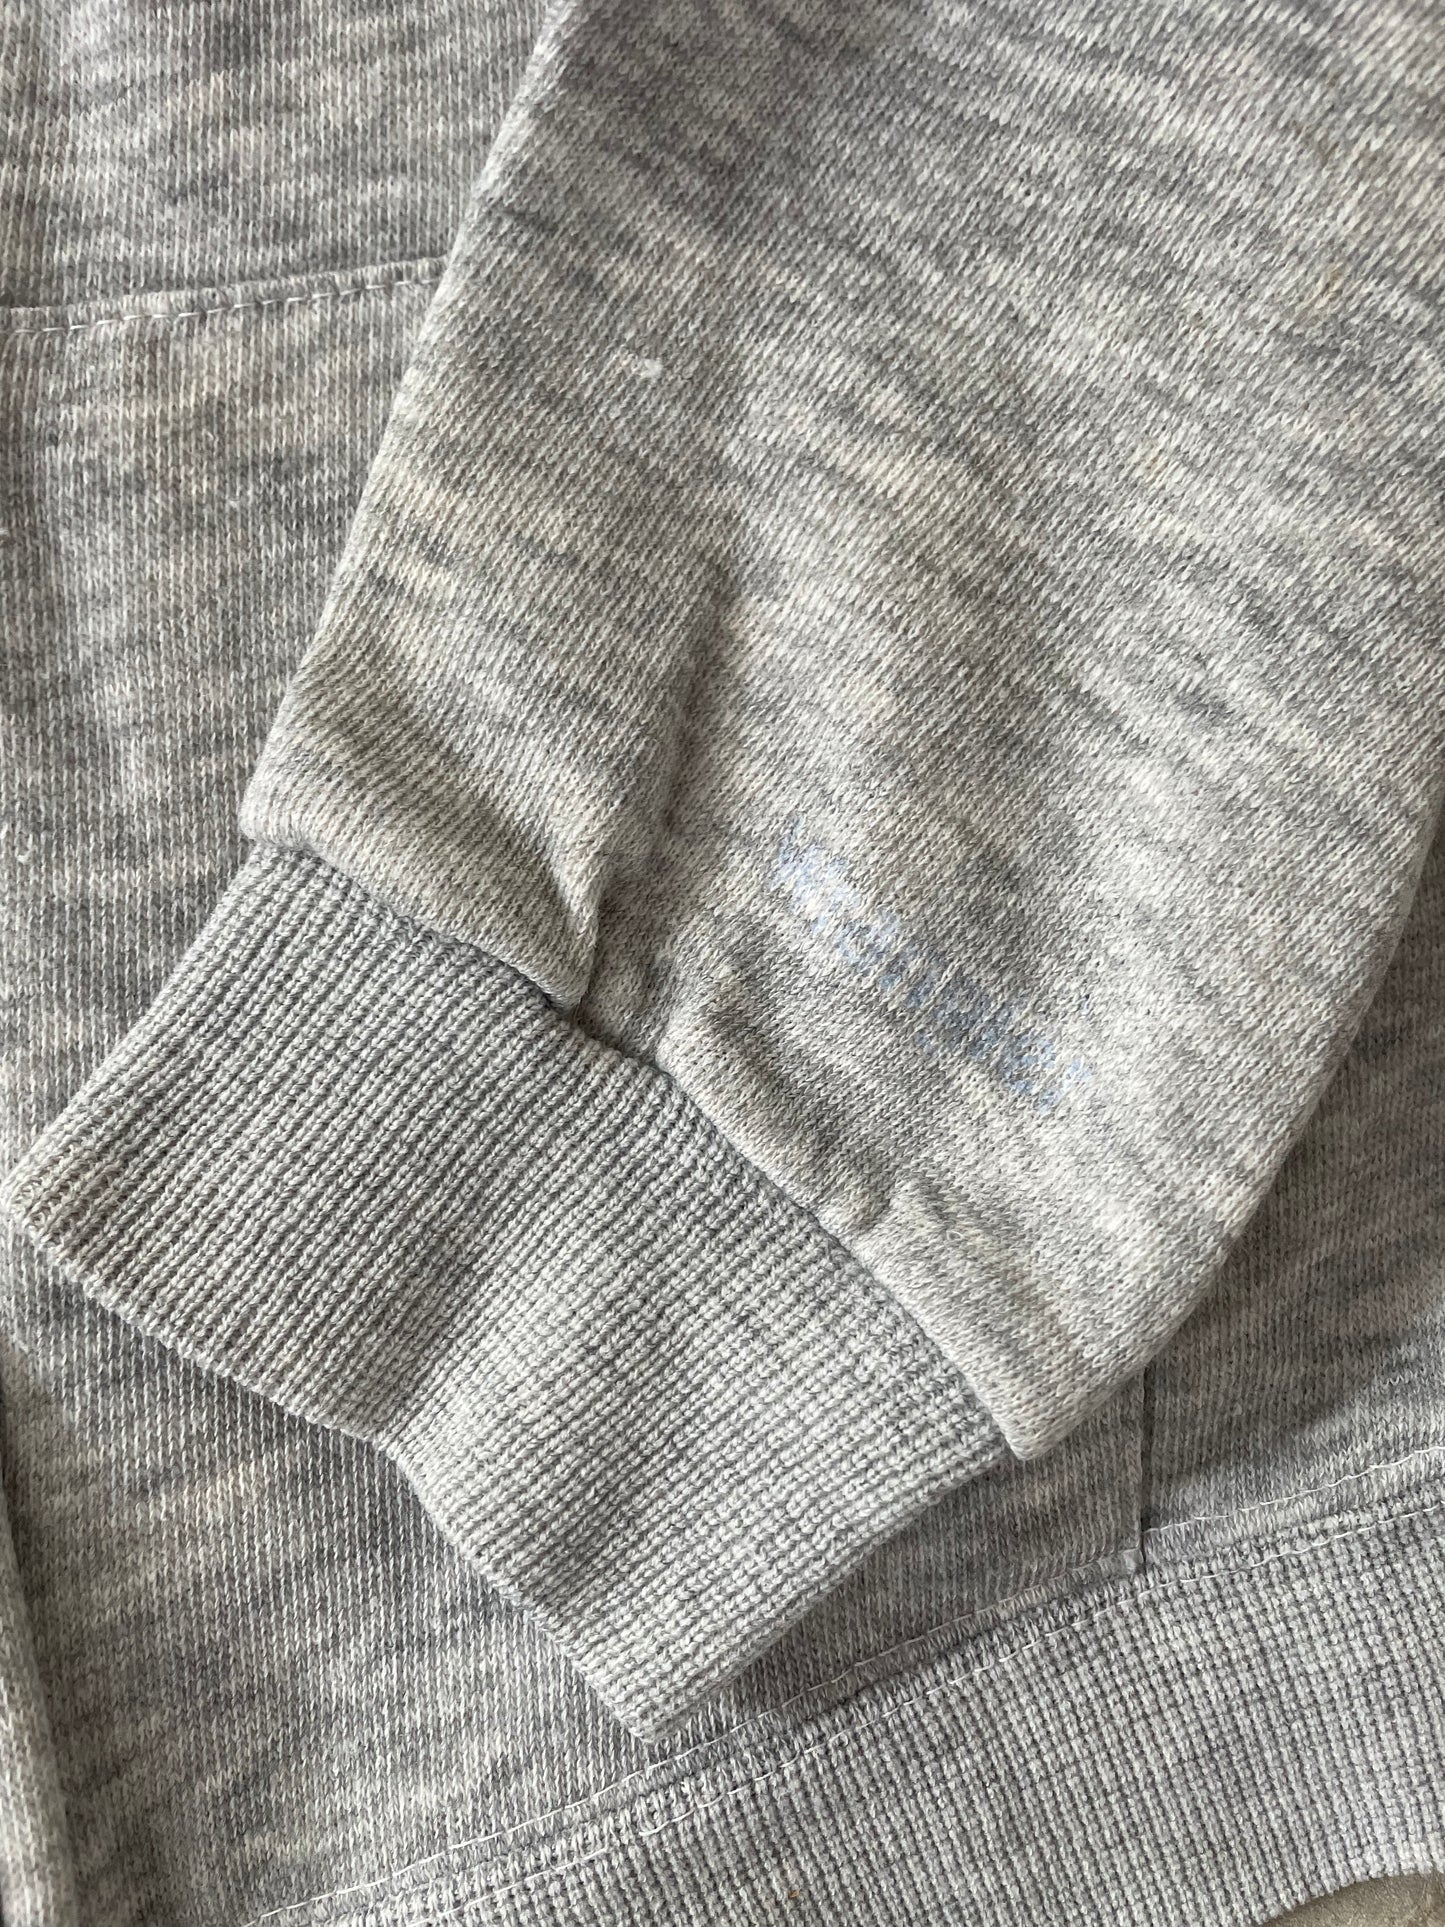 70s/80s Blank Grey Hooded Sweatshirt